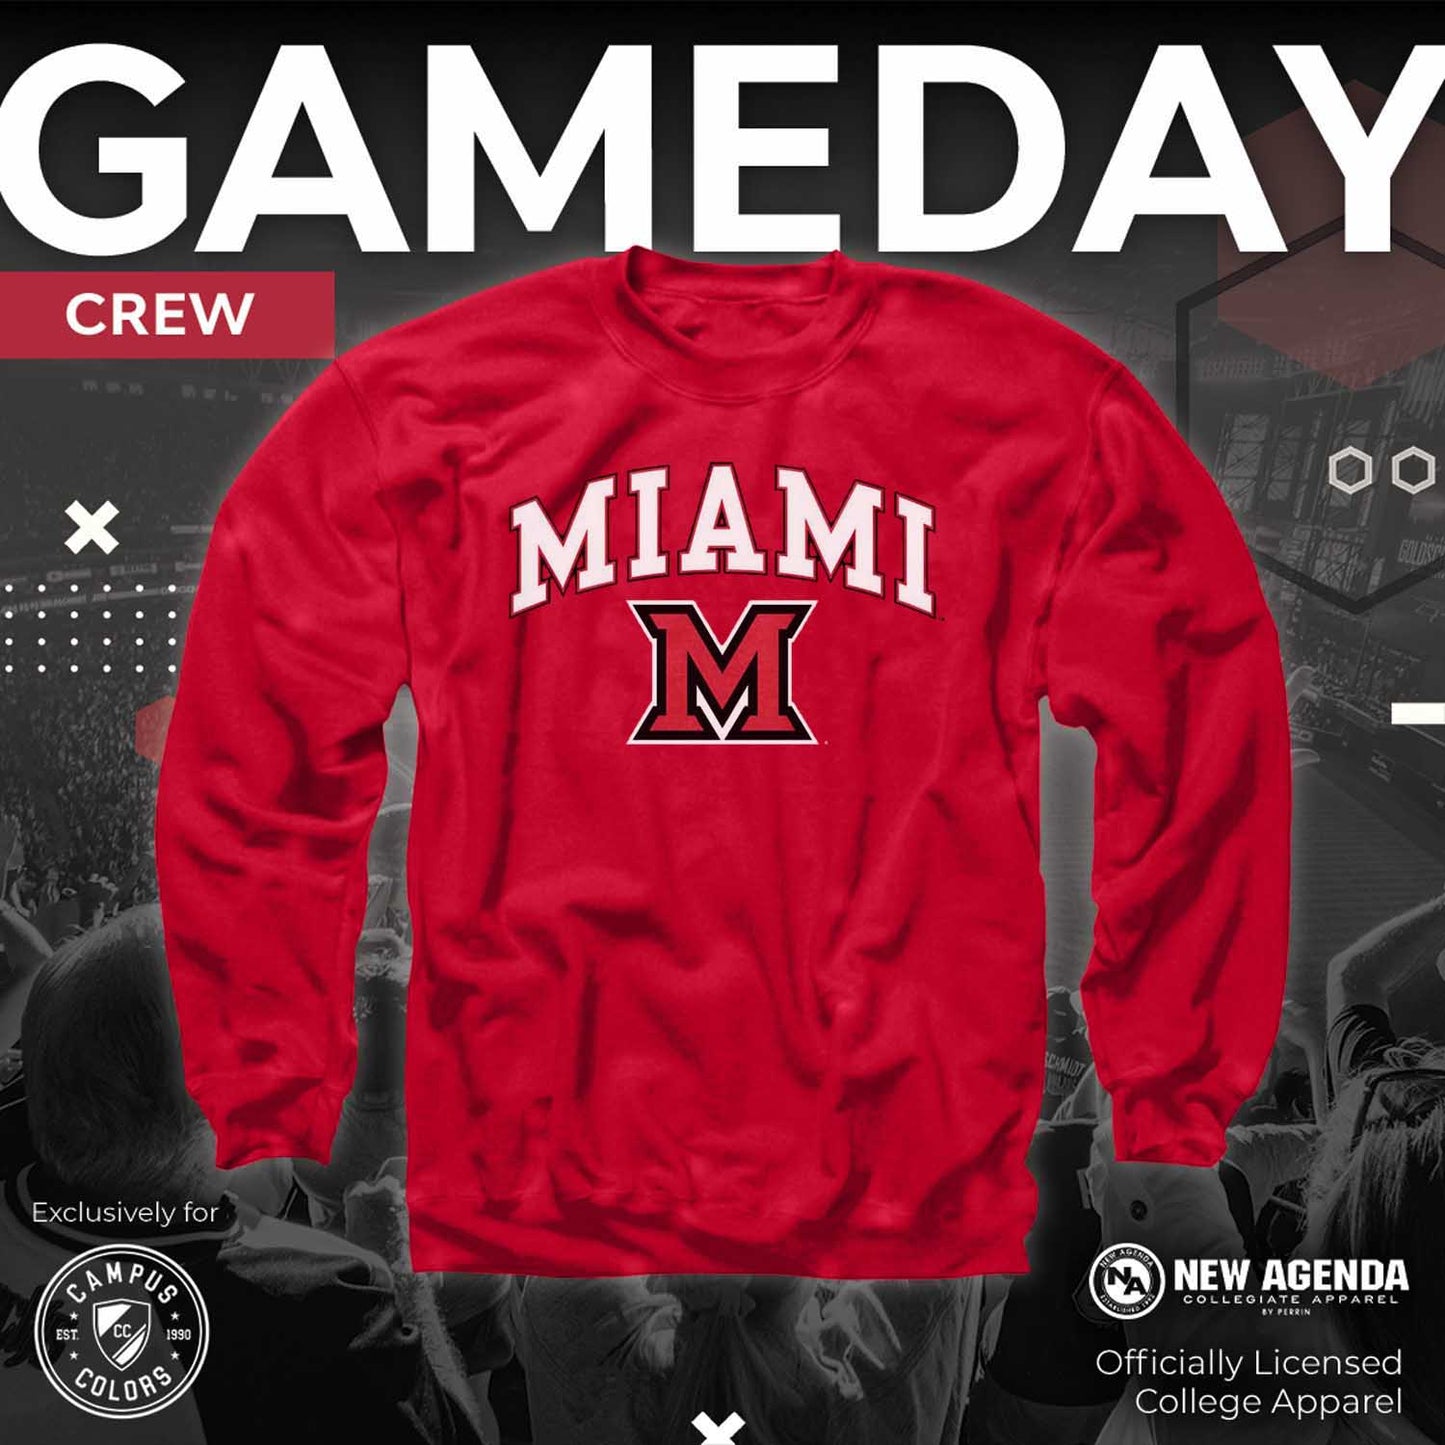 Miami Redhawks Adult Arch & Logo Soft Style Gameday Crewneck Sweatshirt - Red